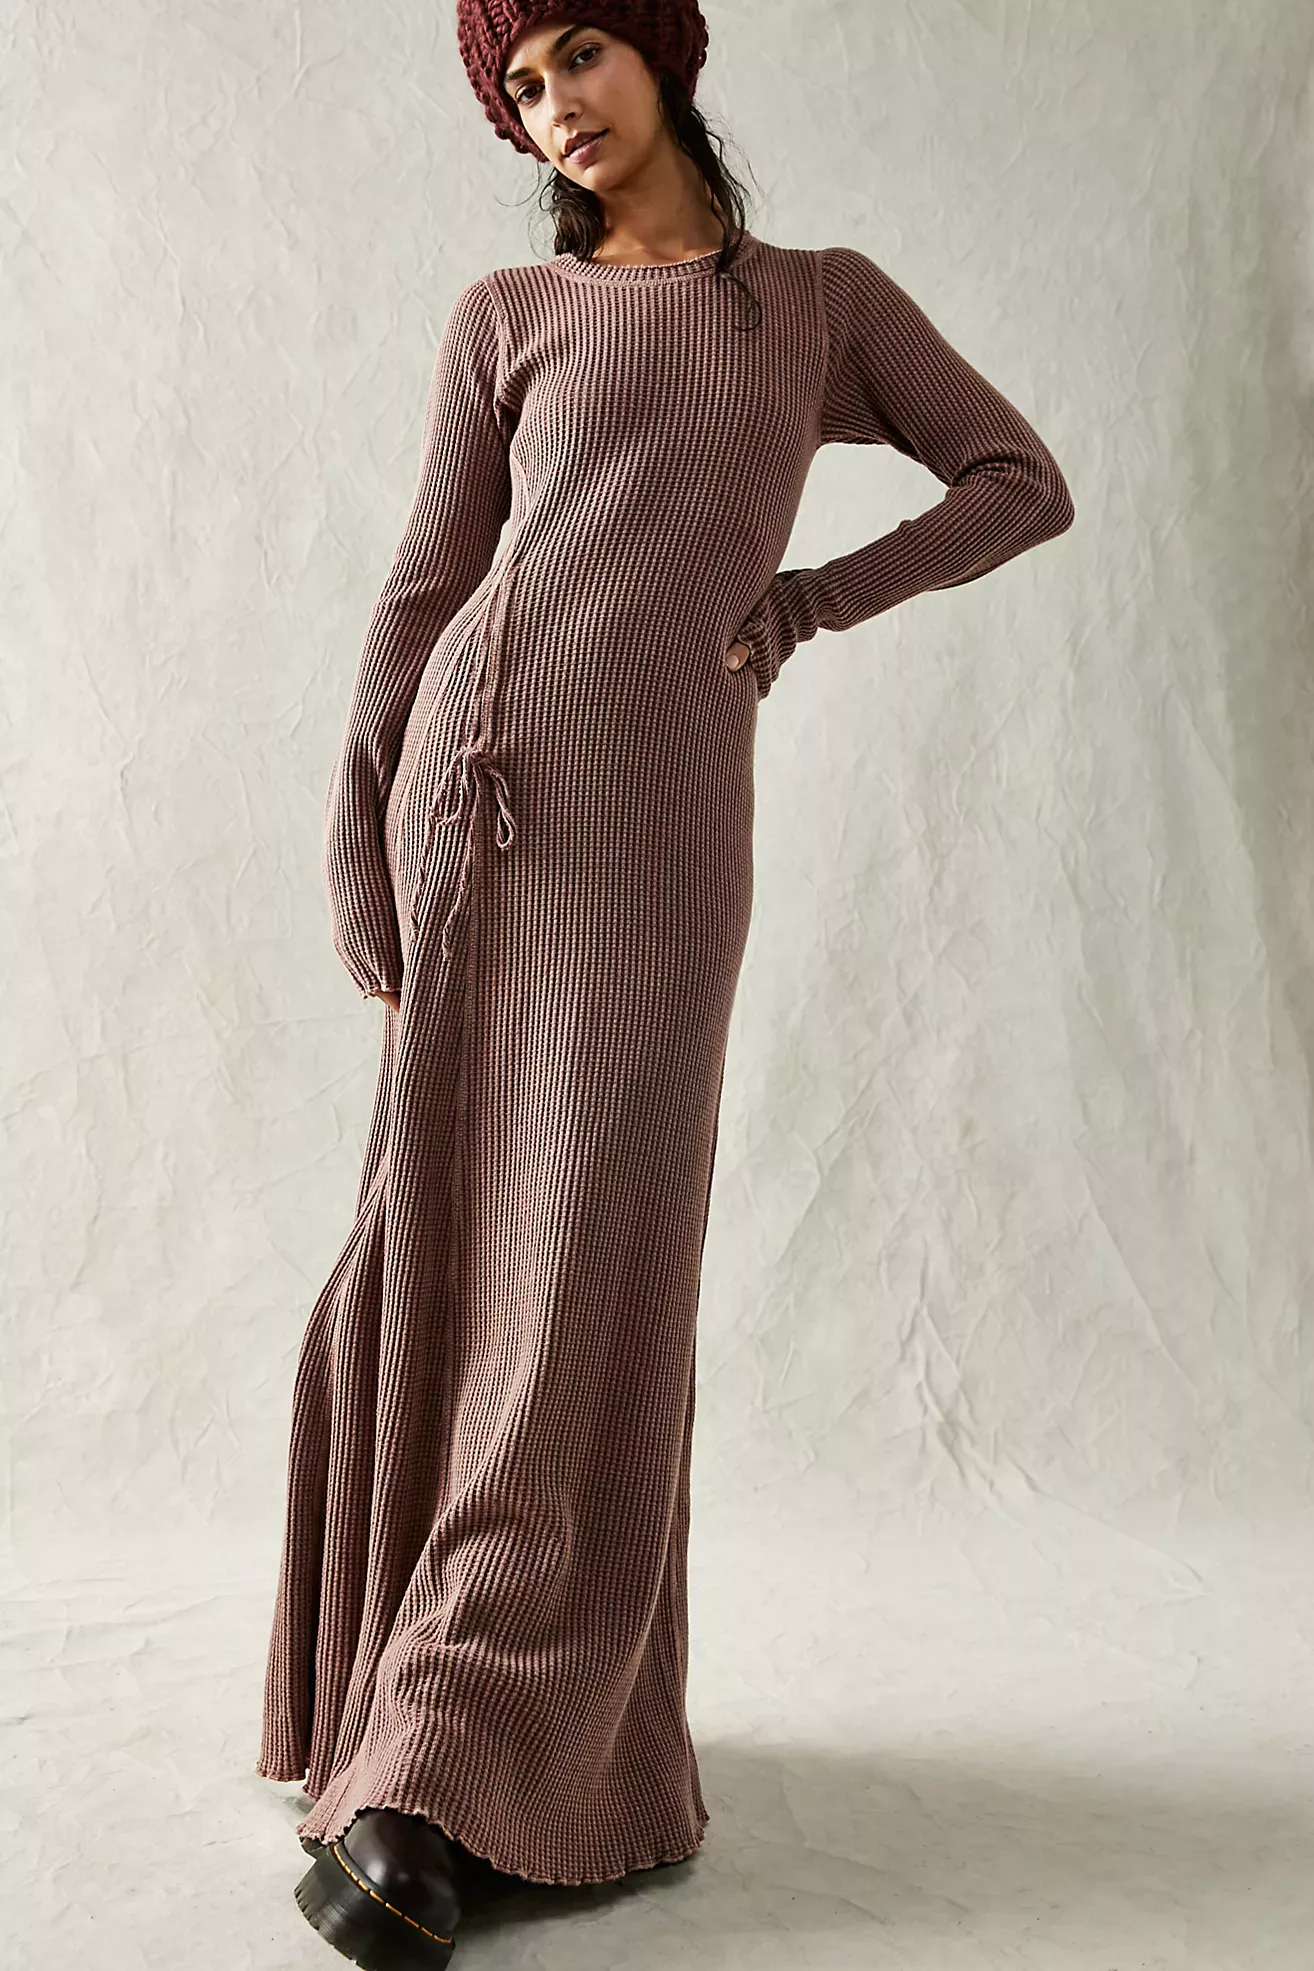 FP One Natasha Thermal Dress curated on LTK